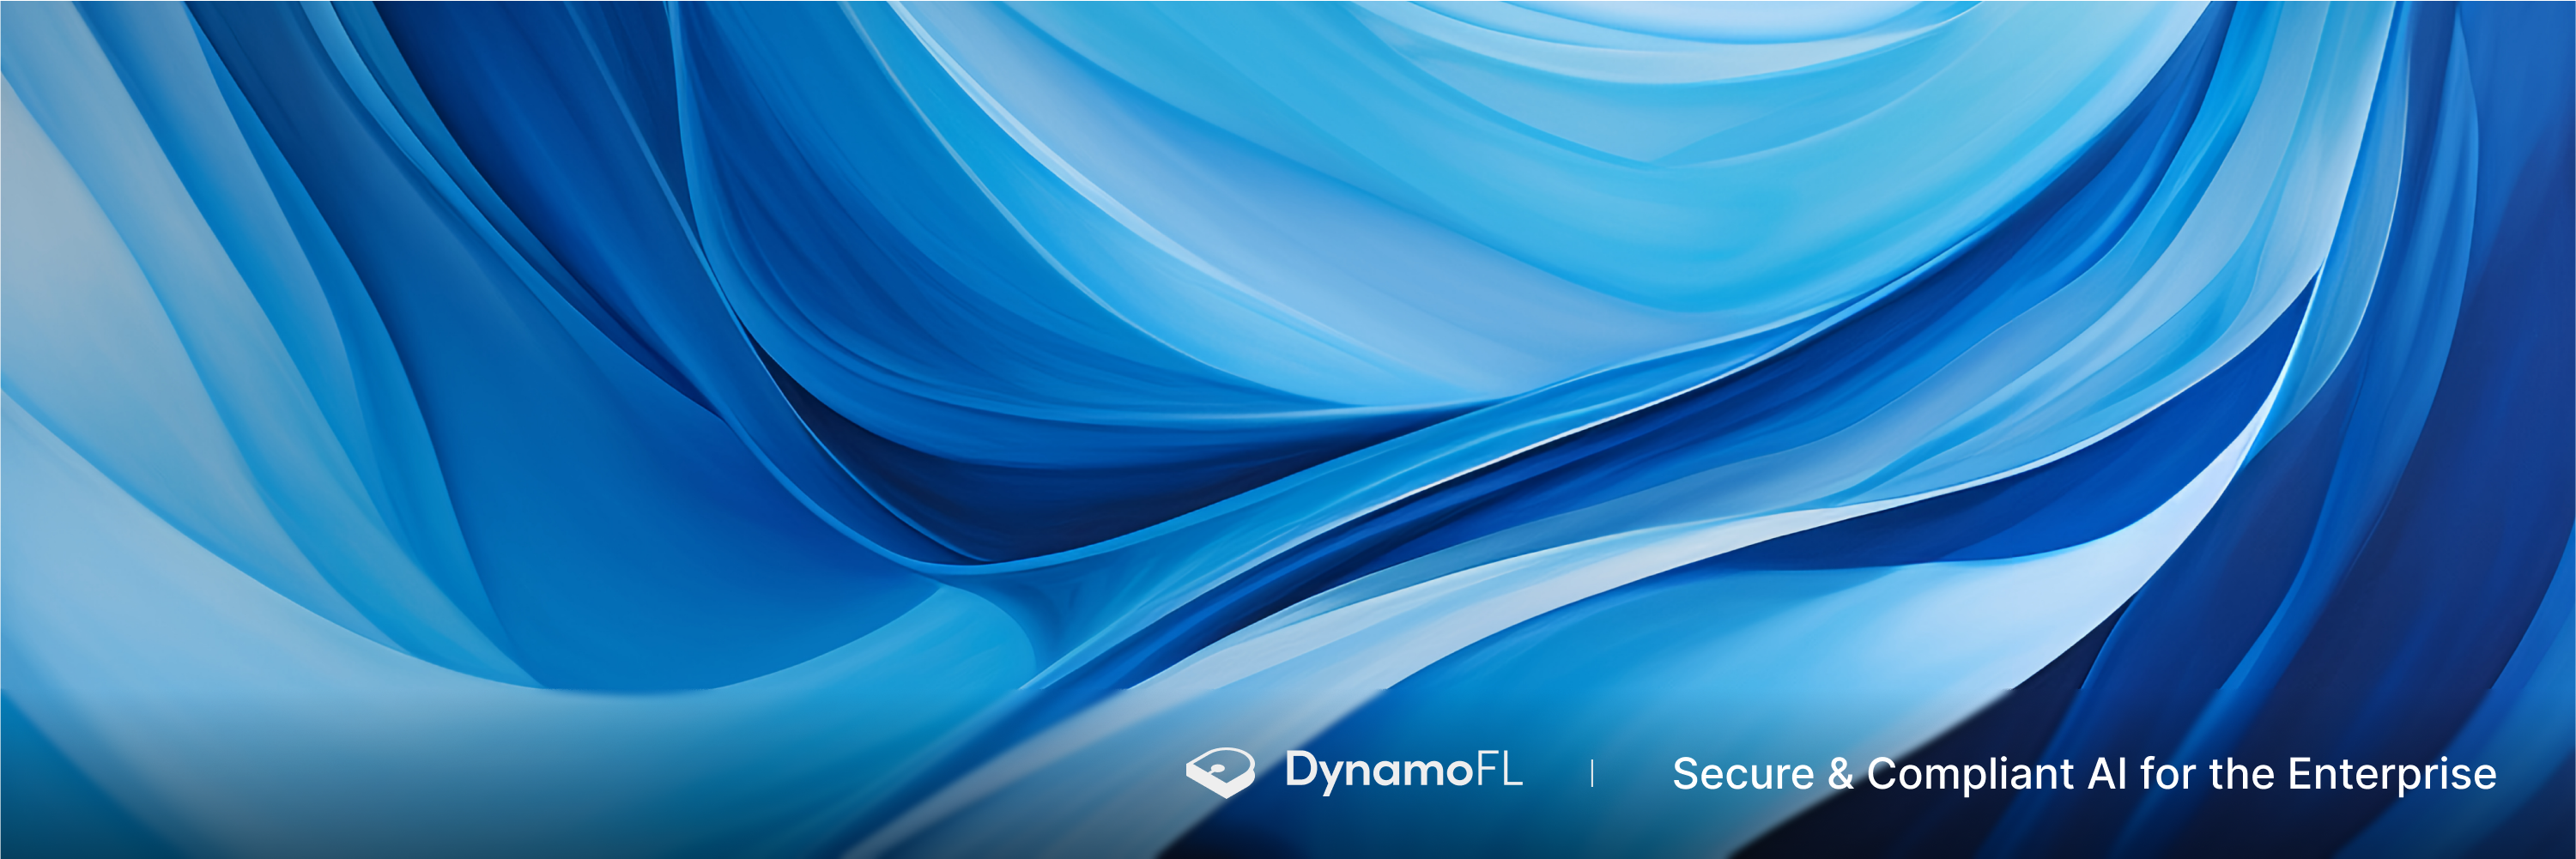 DynamoFL | Secure & Compliant AI for the Enterprise